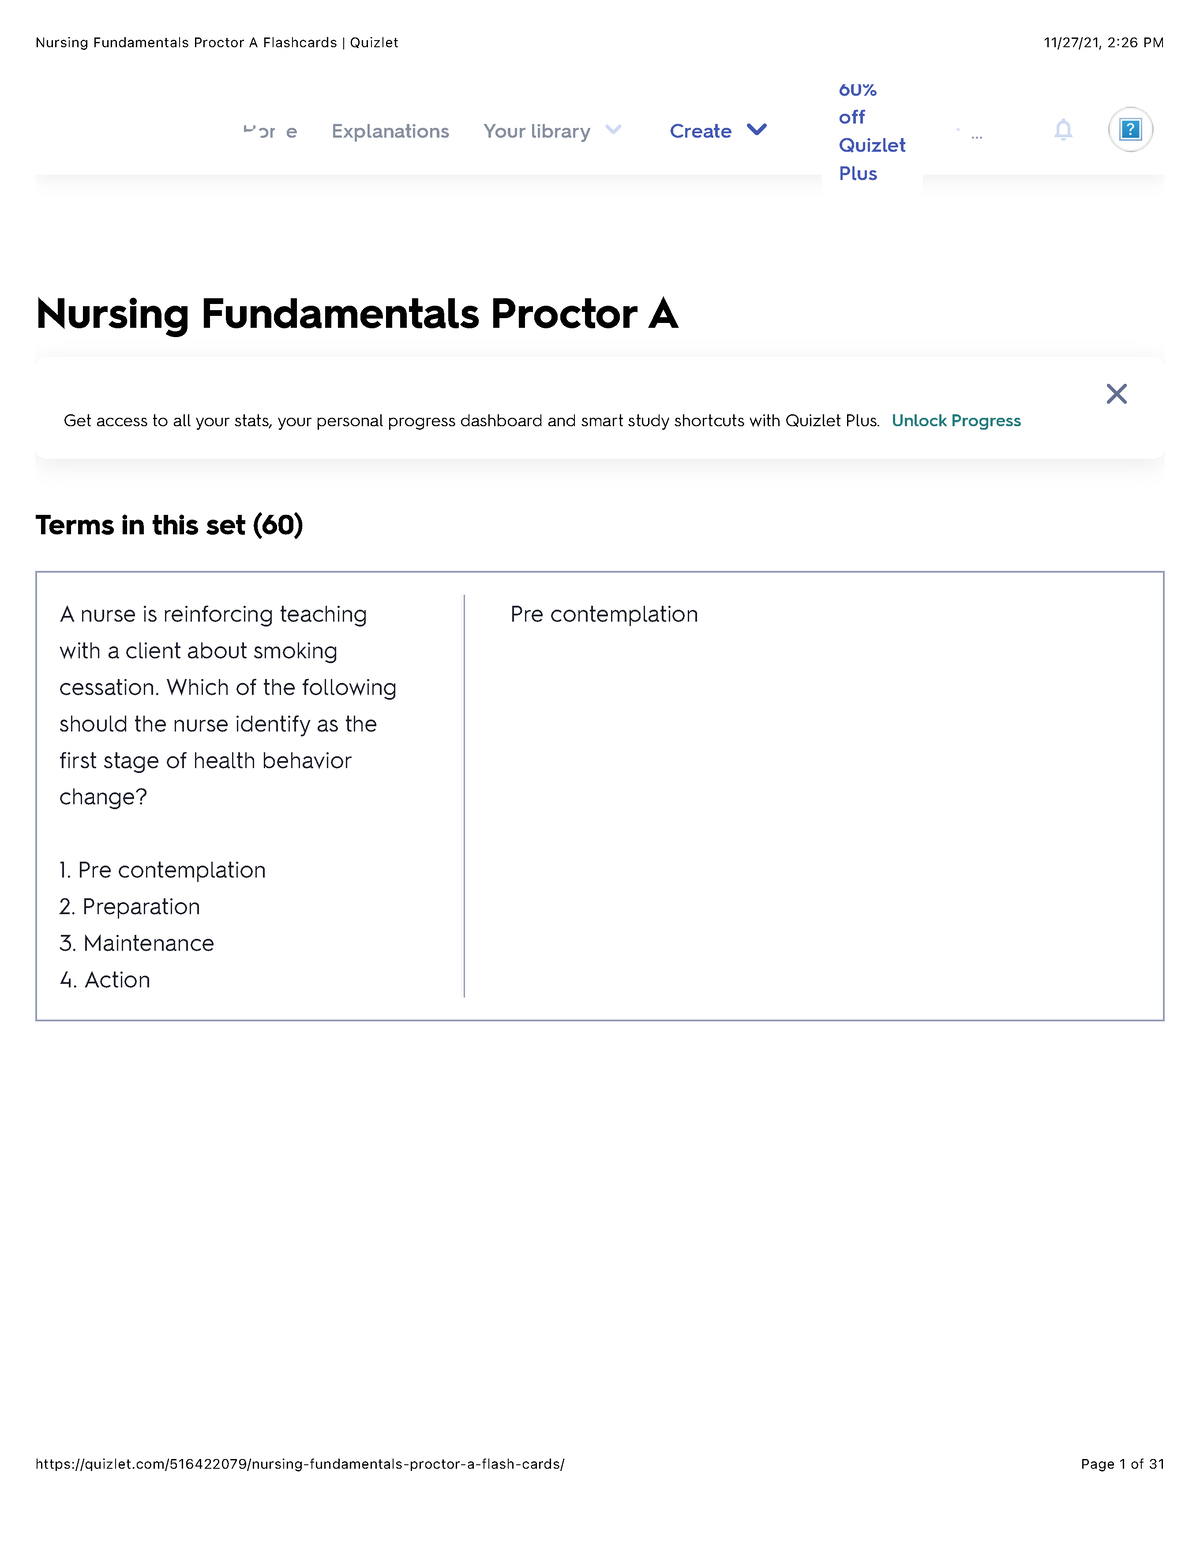 Nursing Fundamentals Proctor A Flashcards Quizlet Create 60 off